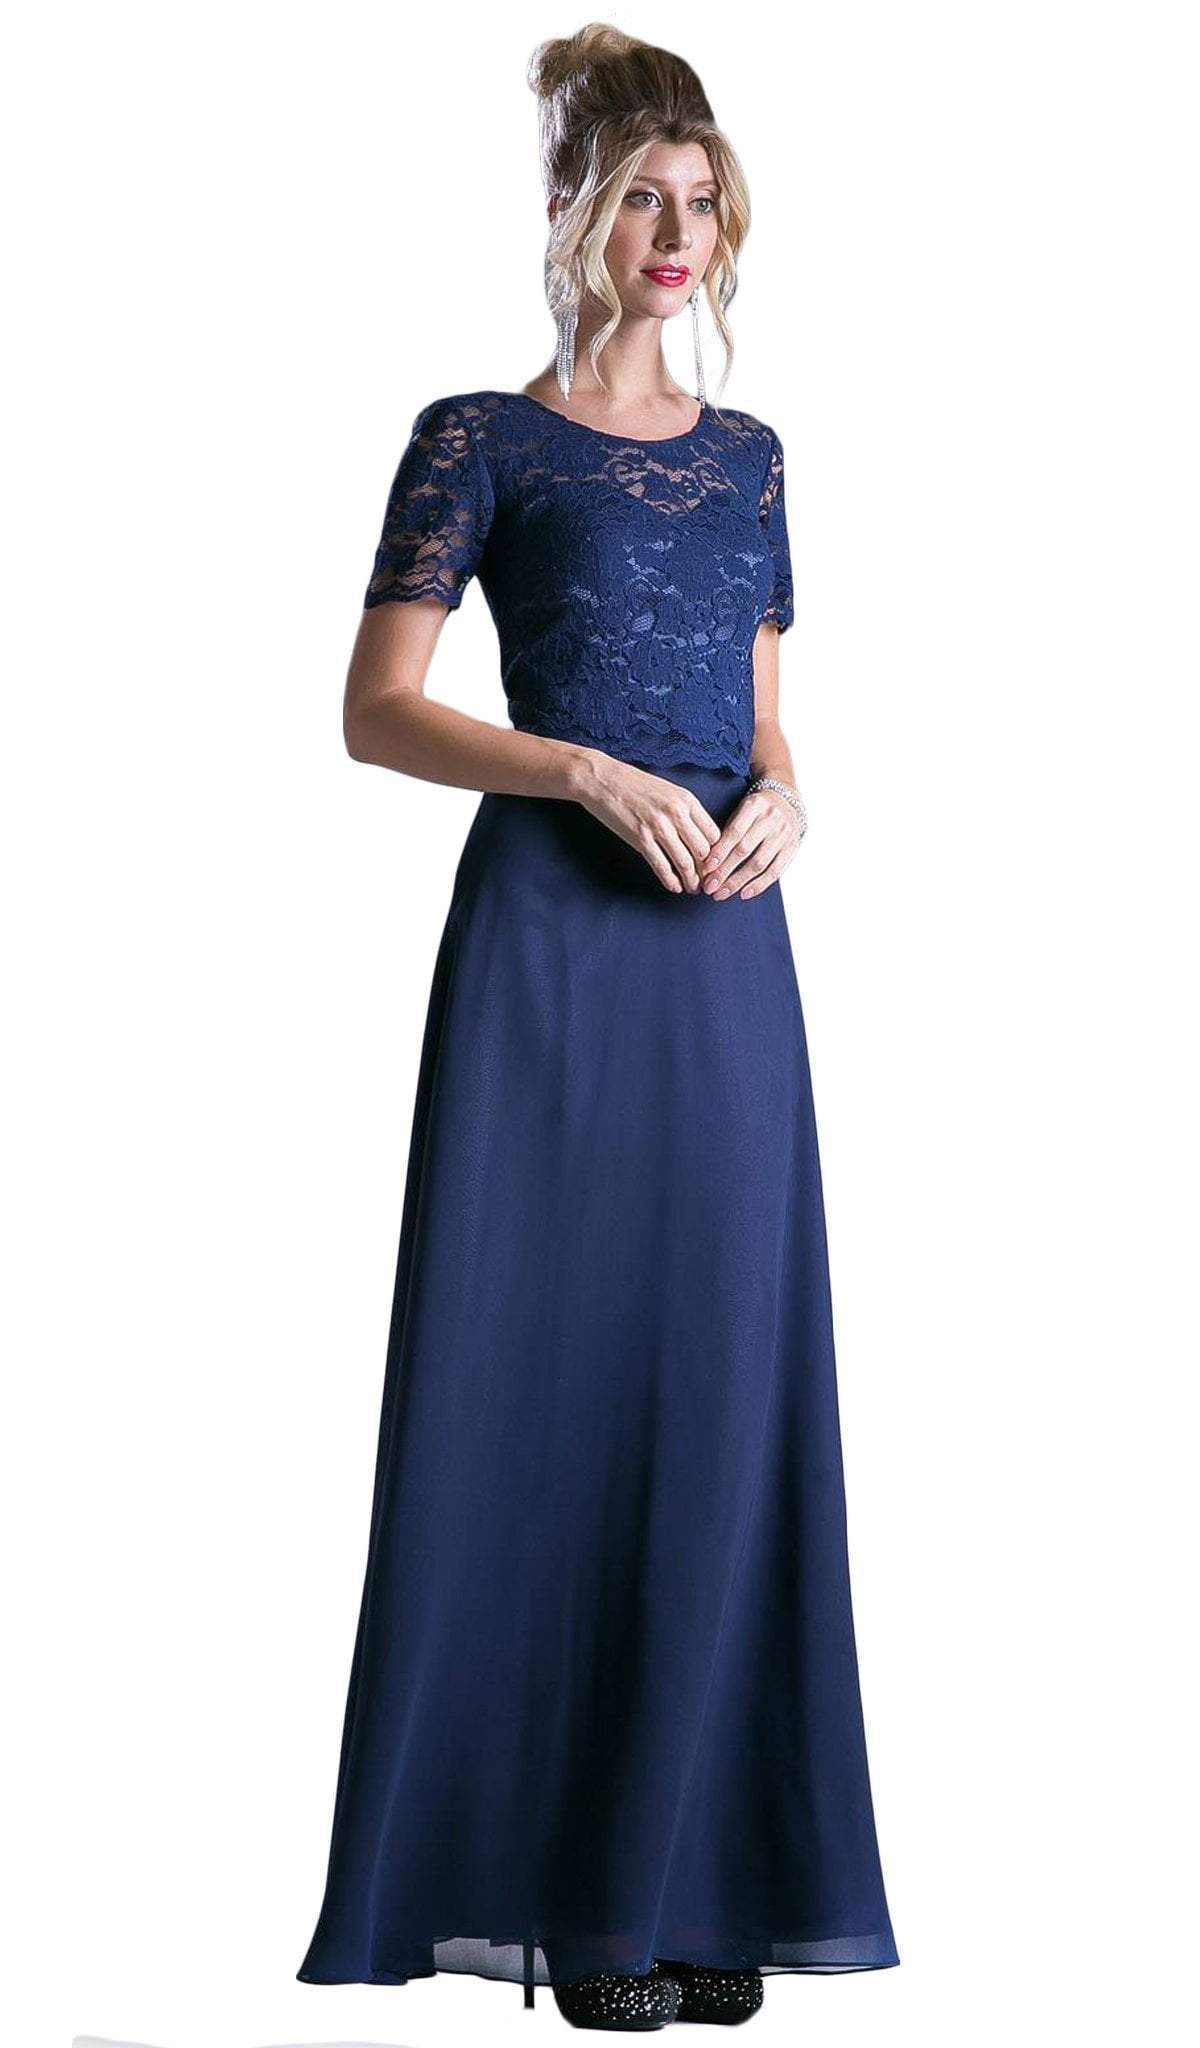 Cinderella Divine - Short Sleeve Lace Bodice Mock Two-Piece Dress
